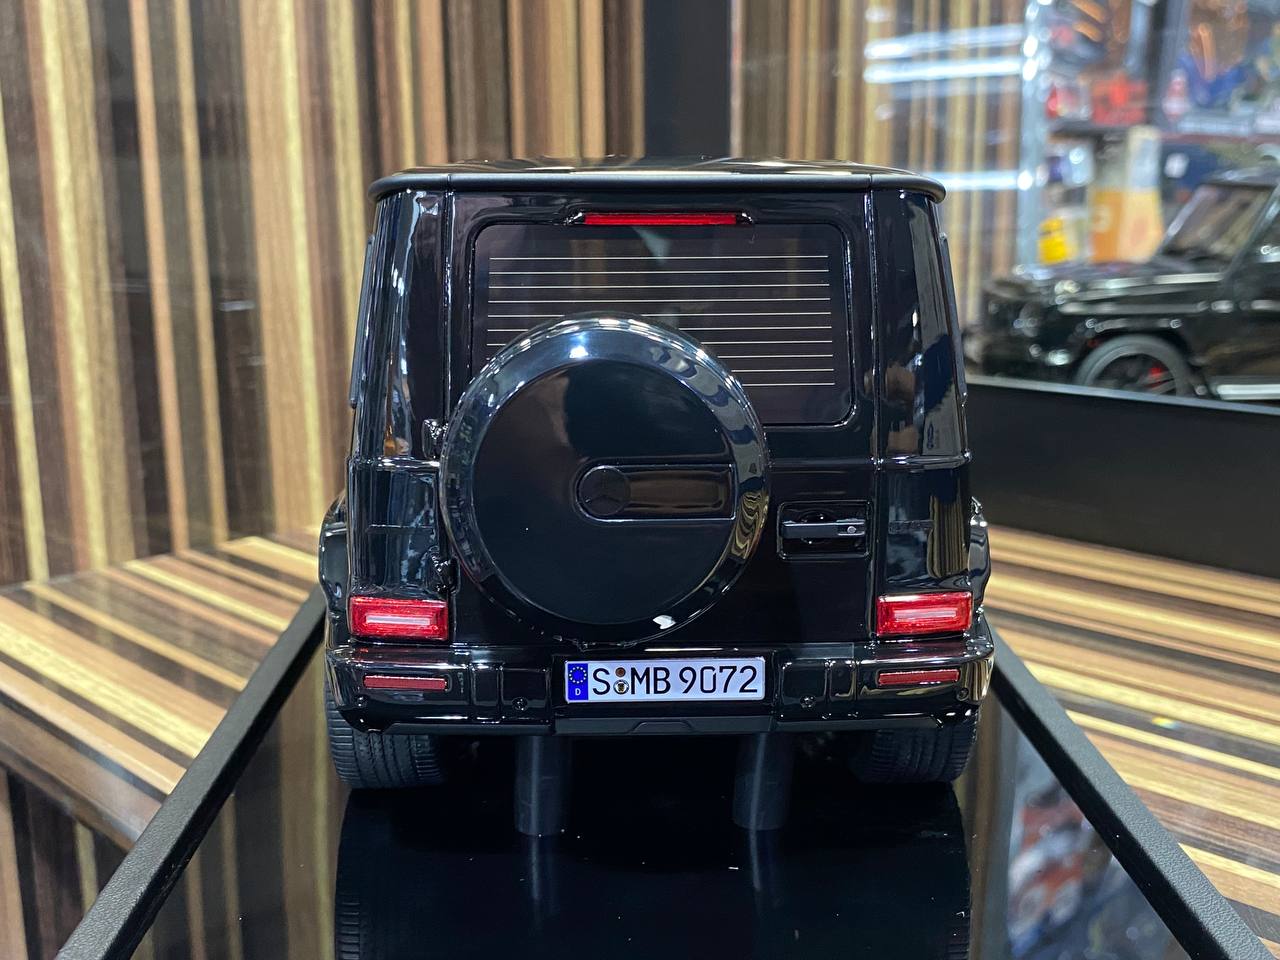 1/18 MotorHelix Resin Model - Mercedes-Benz AMG G-63 (2019) in Sleek Black|Sold in Dturman.com Dubai UAE.